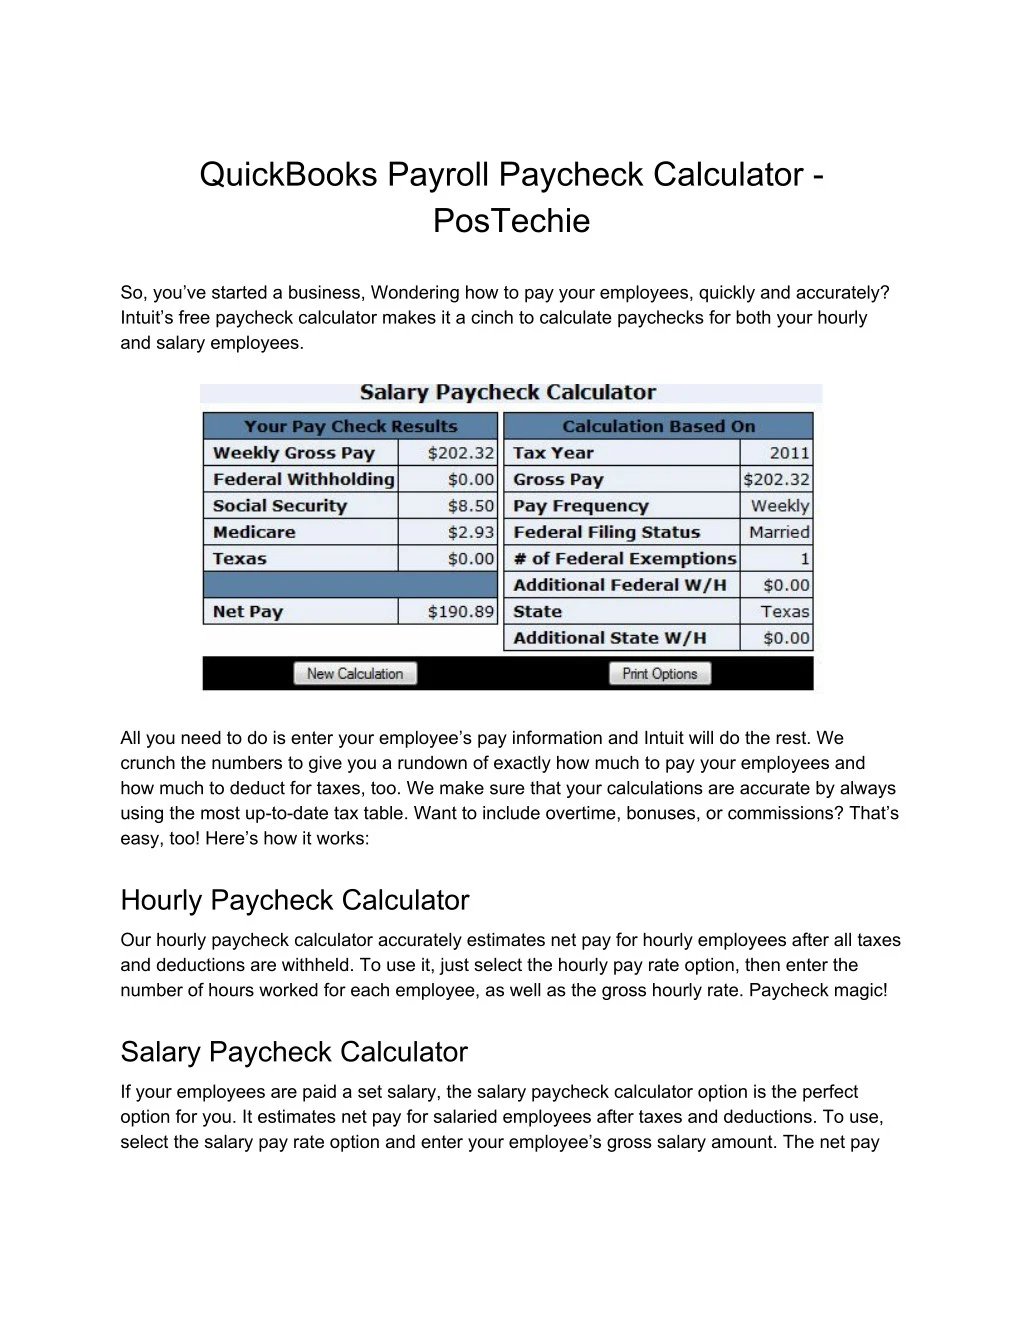 quickbooks payroll paycheck calculator postechie